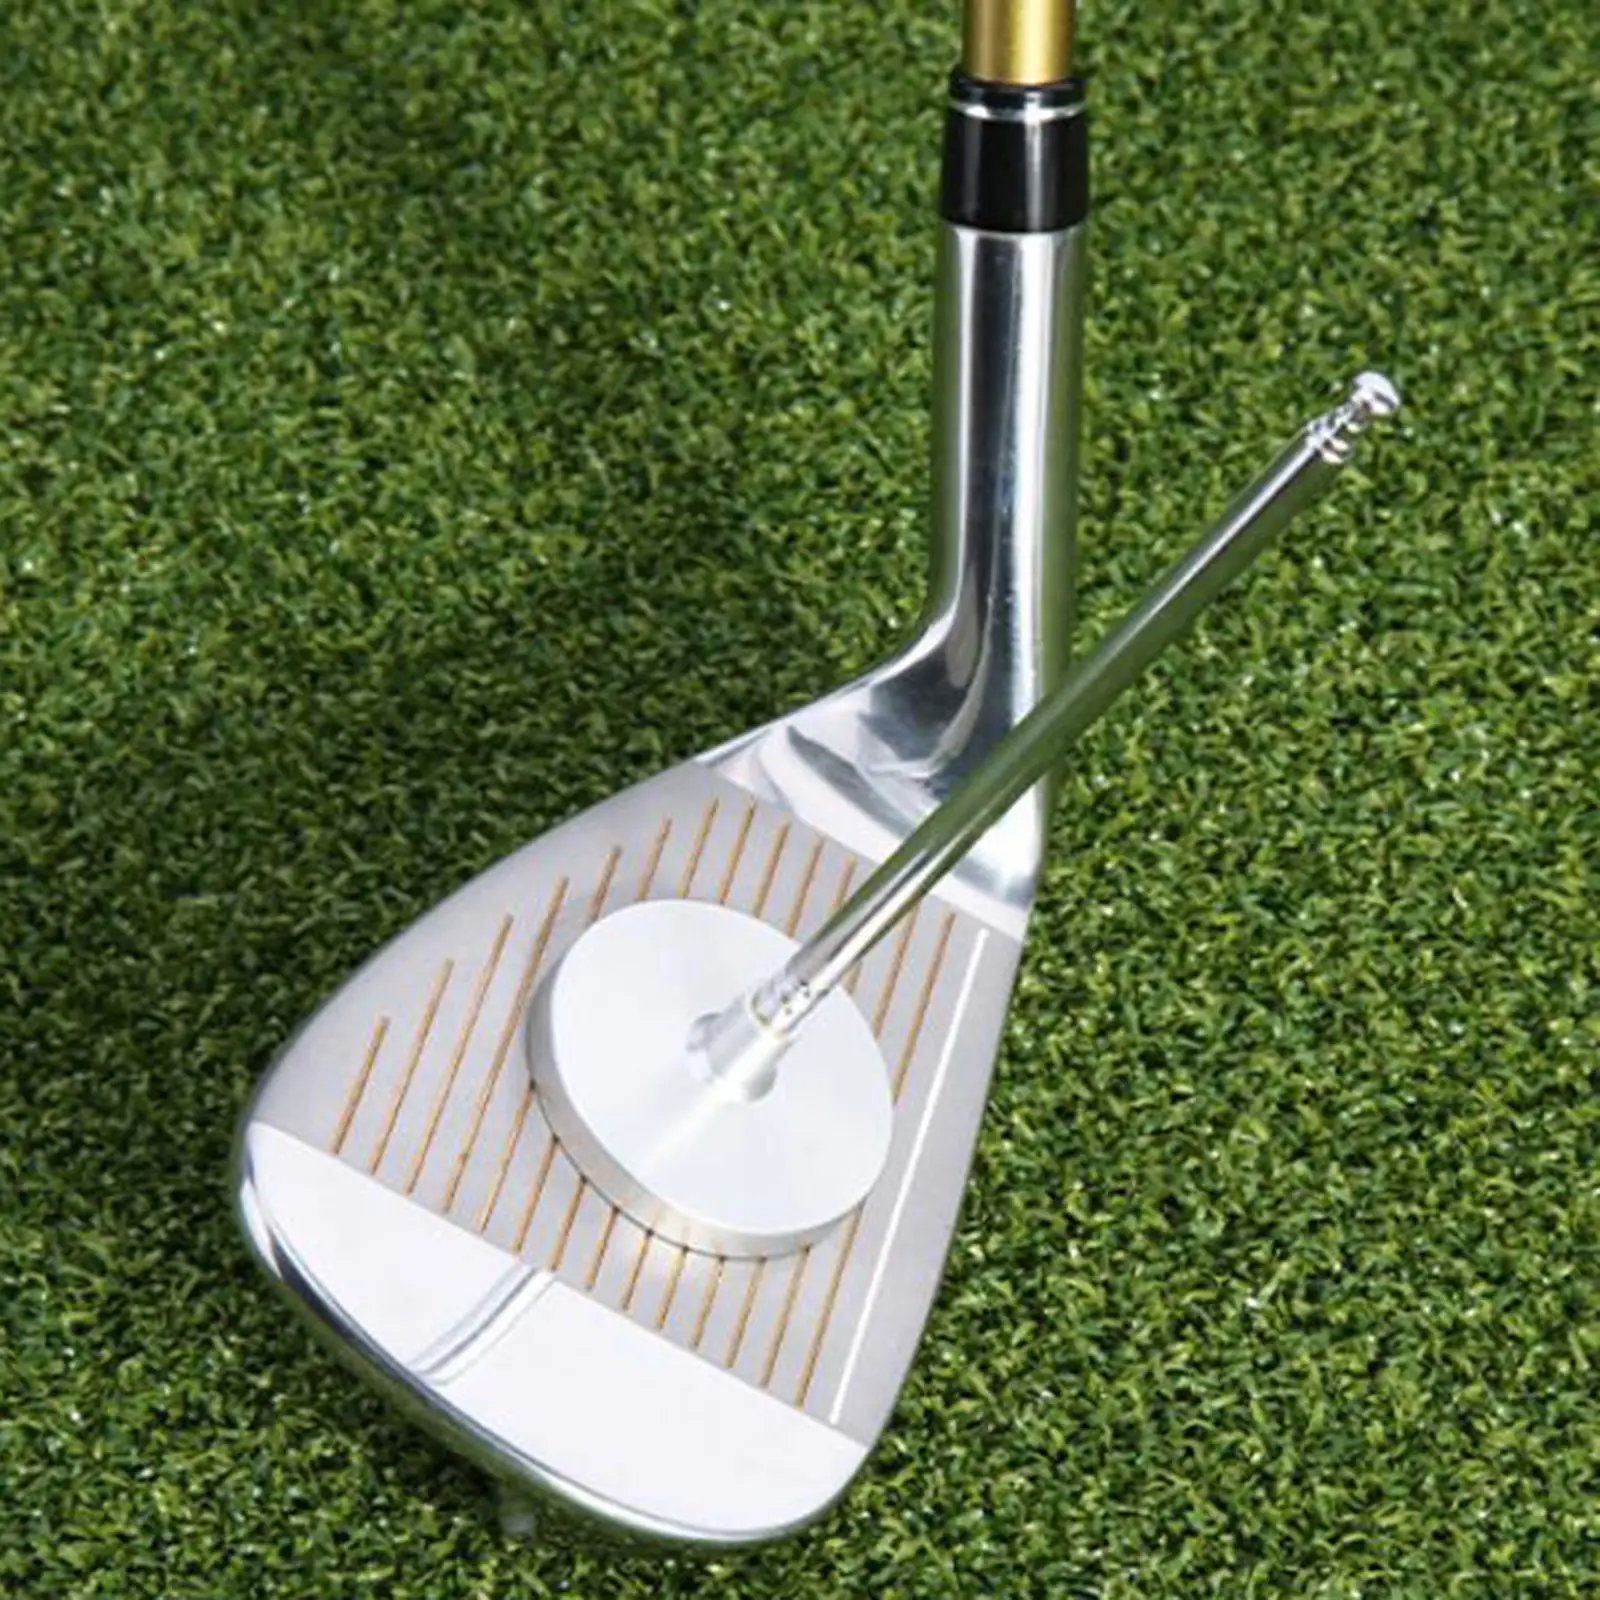 Aluminium Golf Direction Cutting Indicator Golf Swing Training Aid Rod Stick